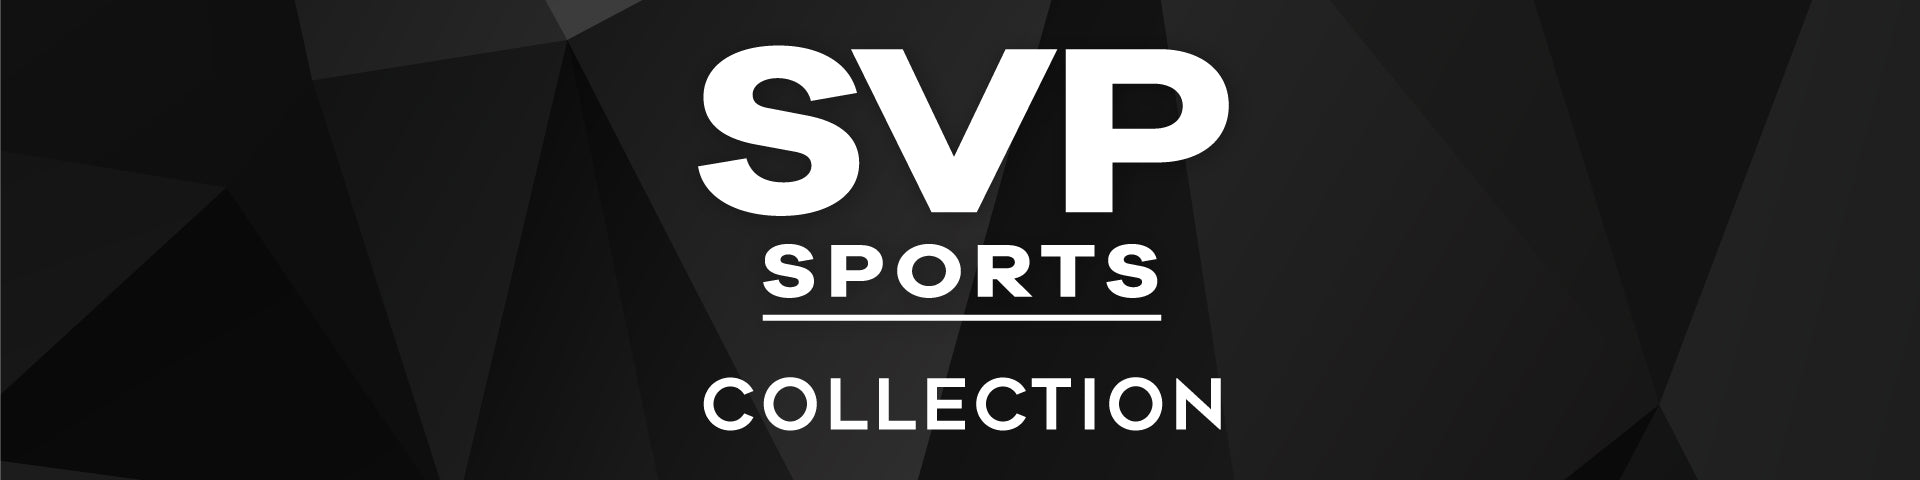 SVP Collection Sport